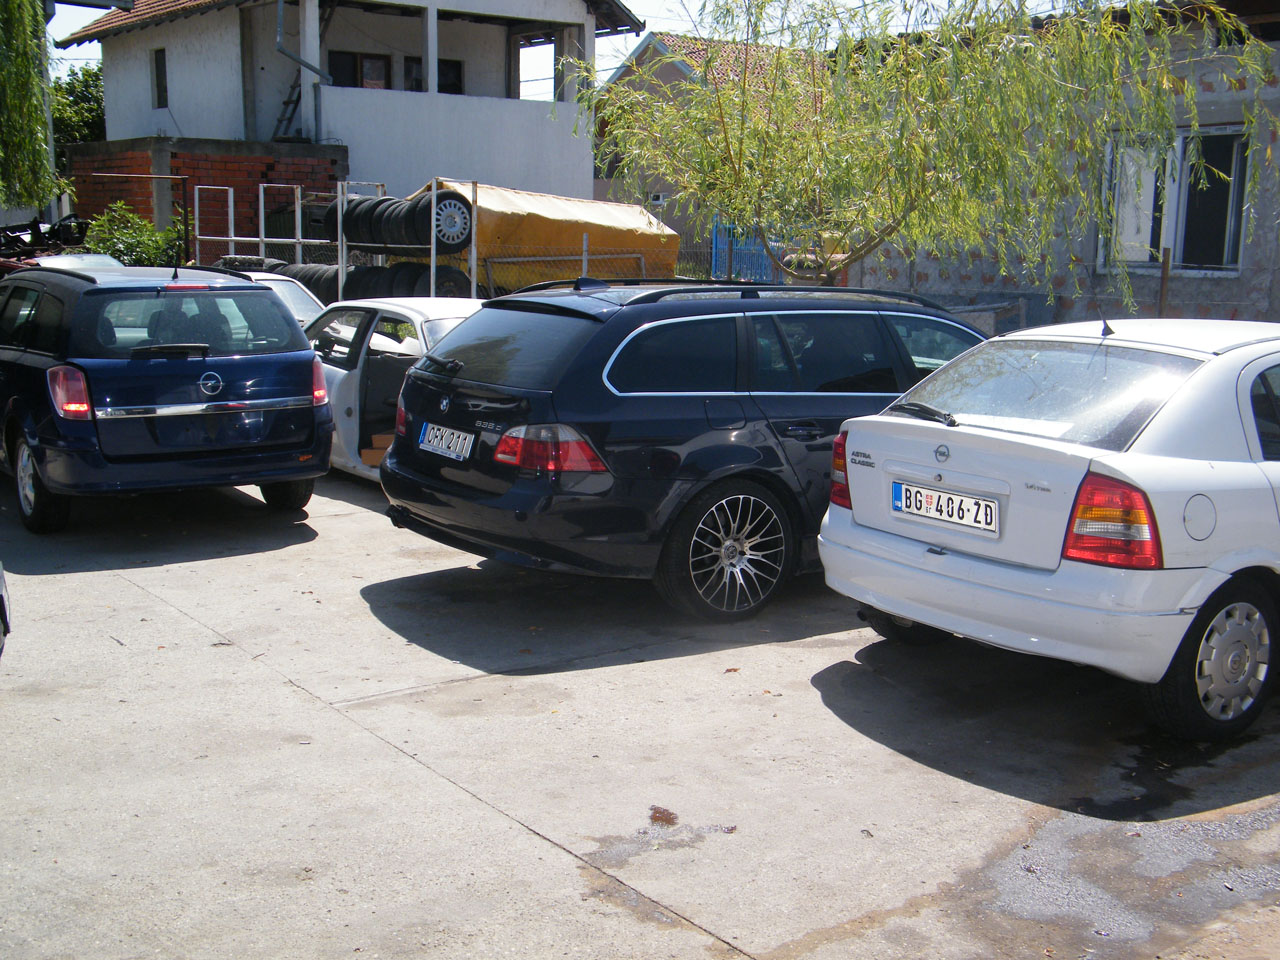 CAR DUMP AND SERVICE OPEL ZIKA I TEDI Car service Belgrade - Photo 1